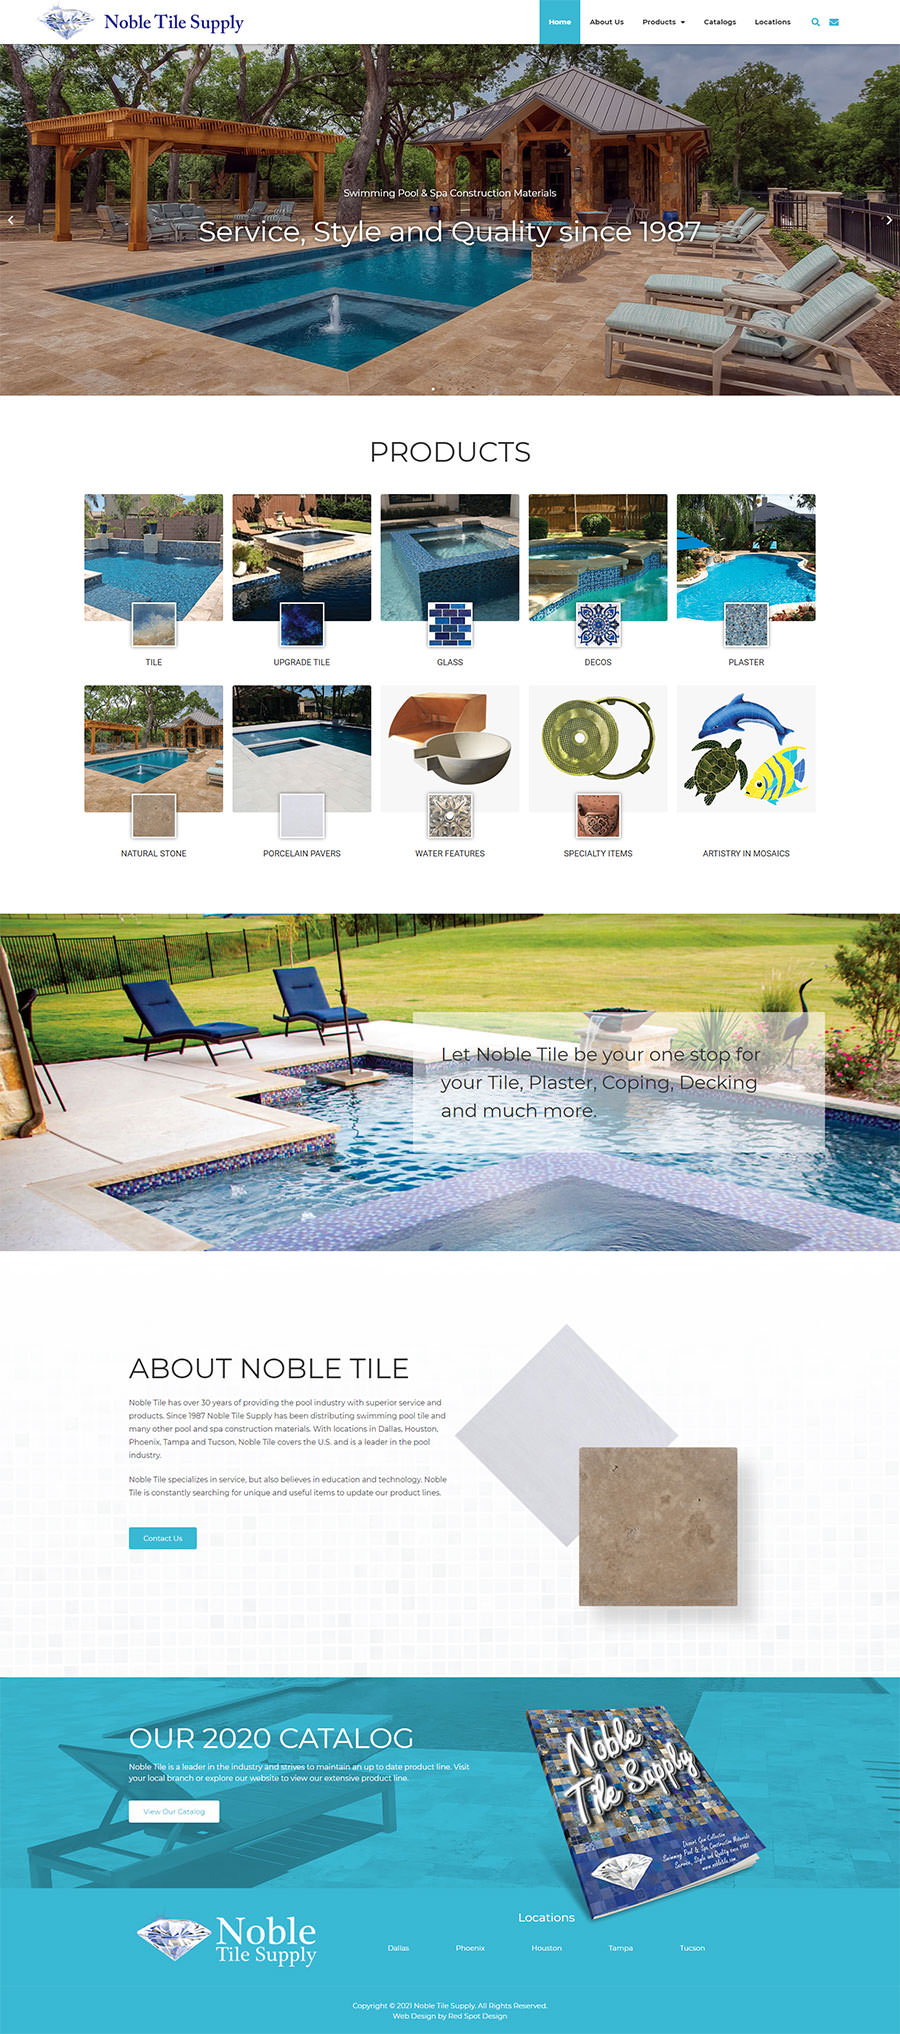 web design for dallas based noble tile supply